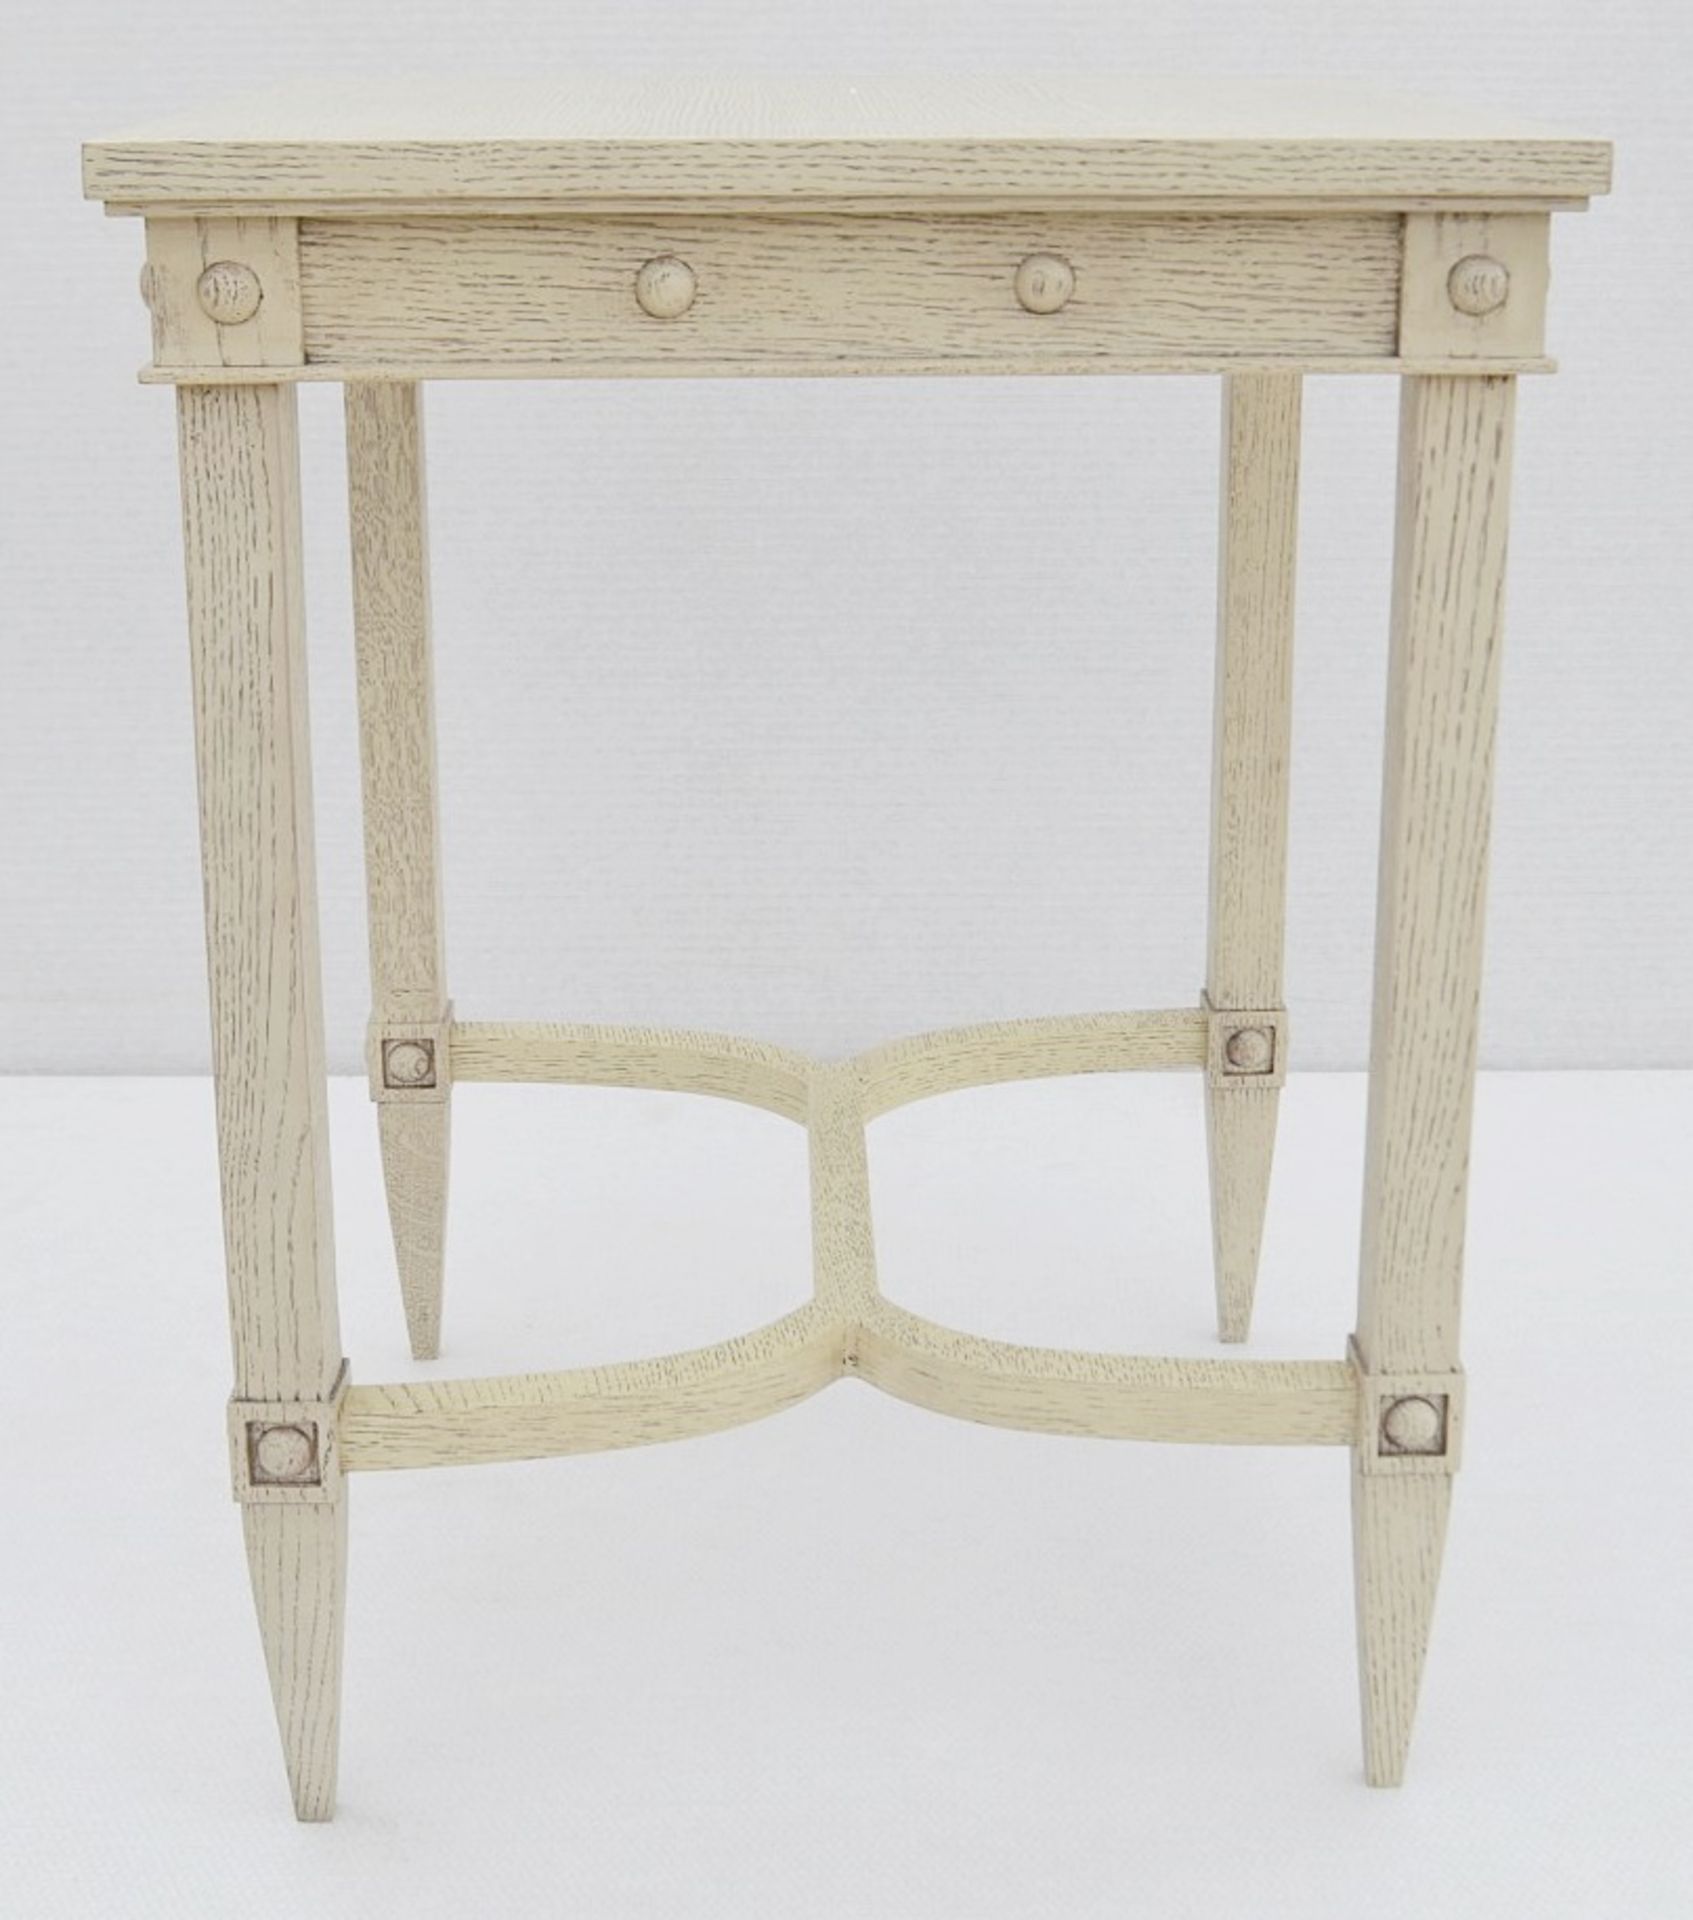 1 x JUSTIN VAN BREDA 'Thomas' Designer Georgian-inspired Table In Limed Grey Oak - RRP £1,320 - Image 2 of 6